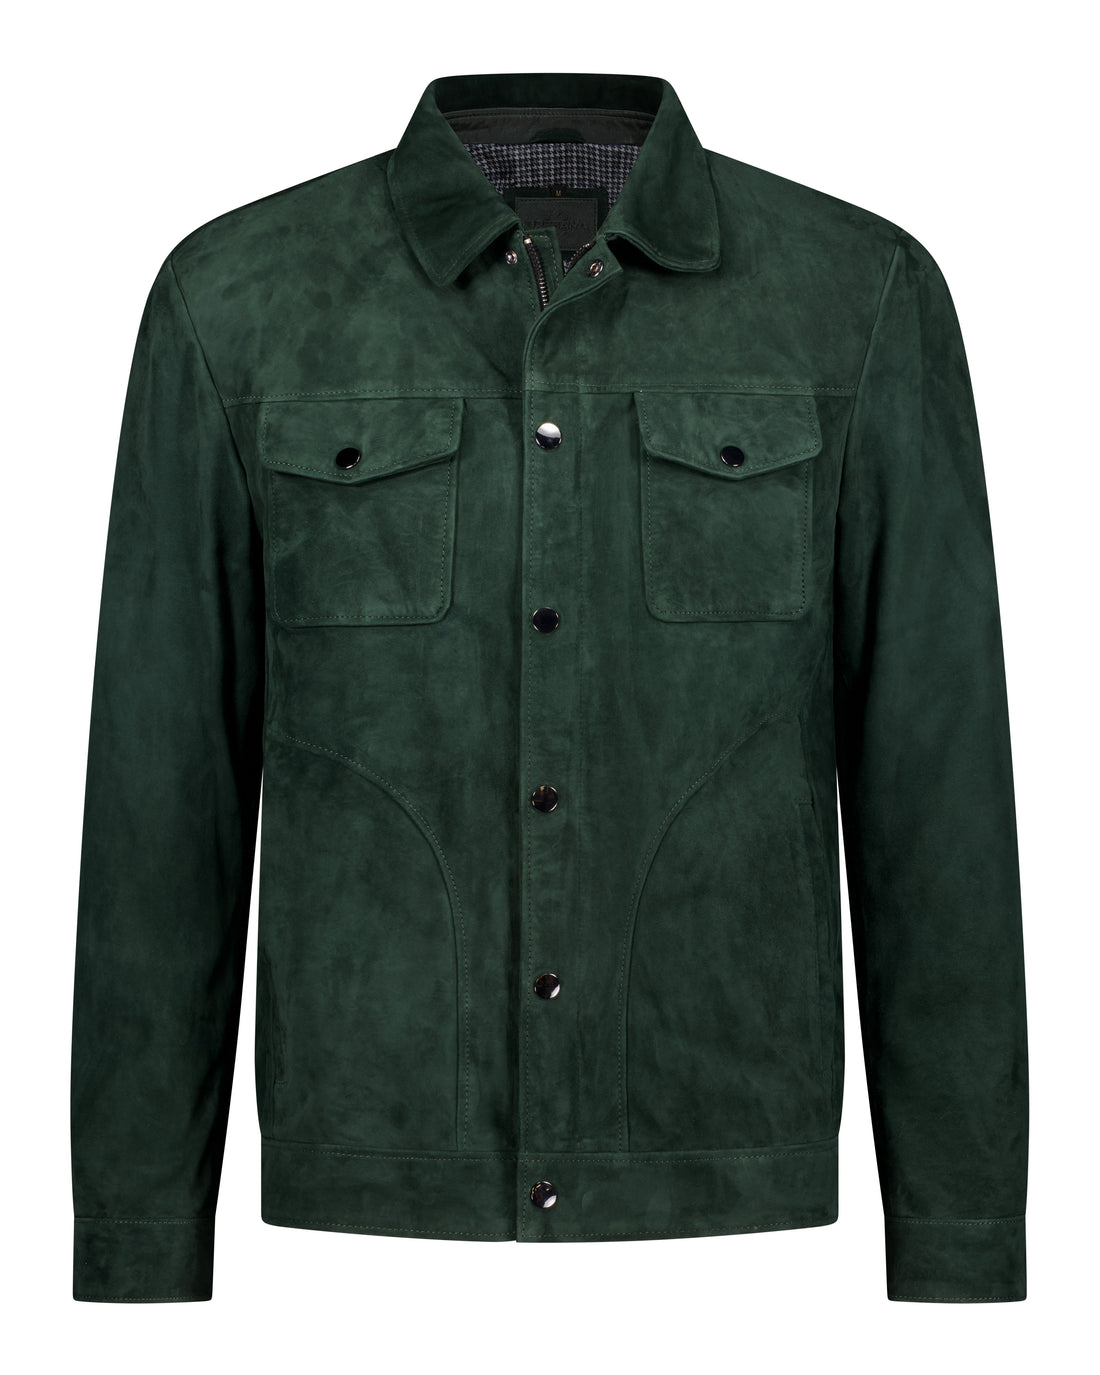 Trucker Suede Leather Jacket - Emerald Green